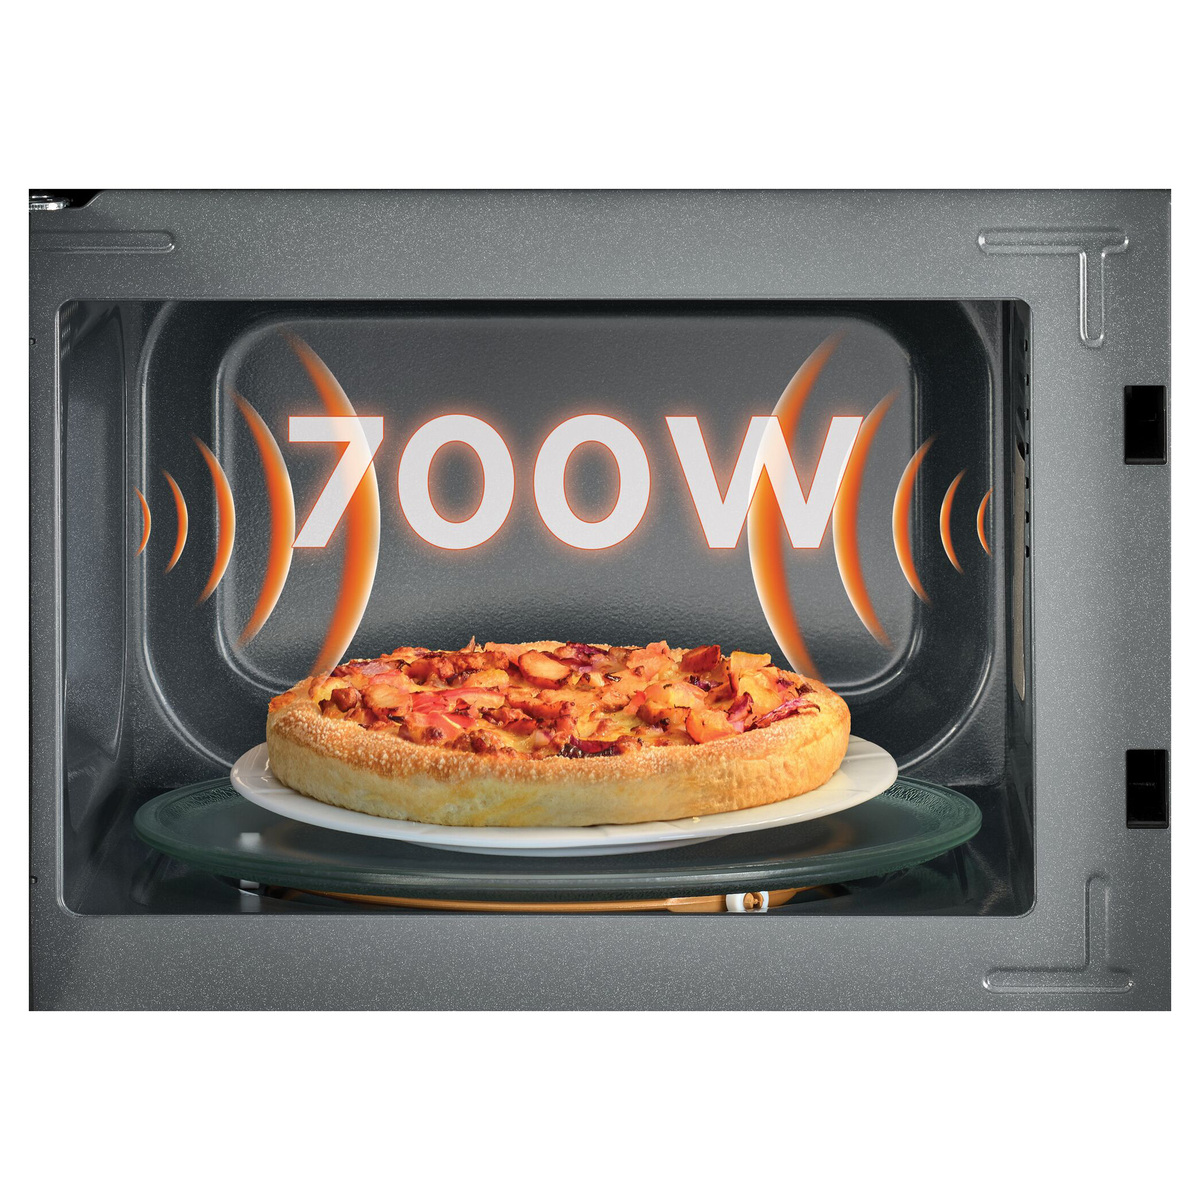 Black+Decker Microwave Oven, 20 L, MZ2015P-B5